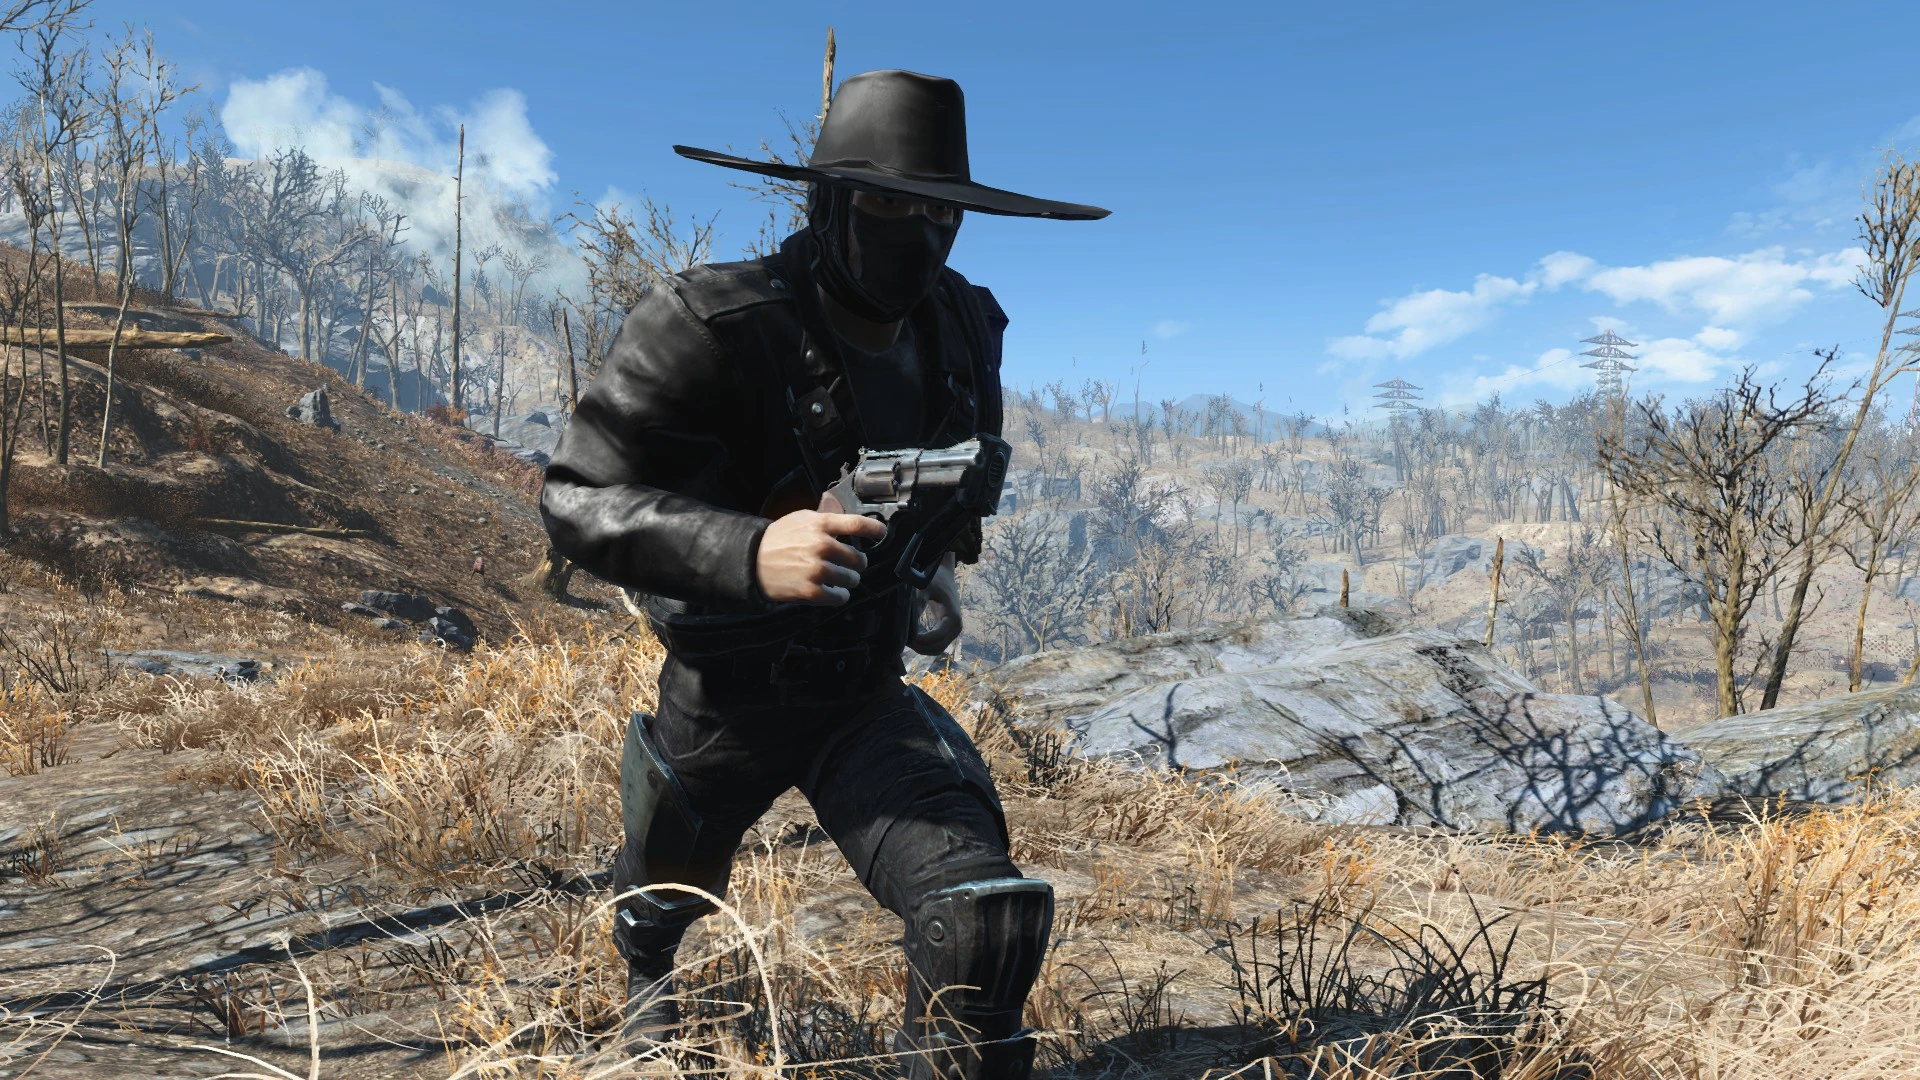 Fallout ковбой. Фоллаут 4 ковбойская одежда. Фоллаут 4 одежда ковбоя. Fallout 4 Cowboy outfit. Фоллаут 4 Western Mod.